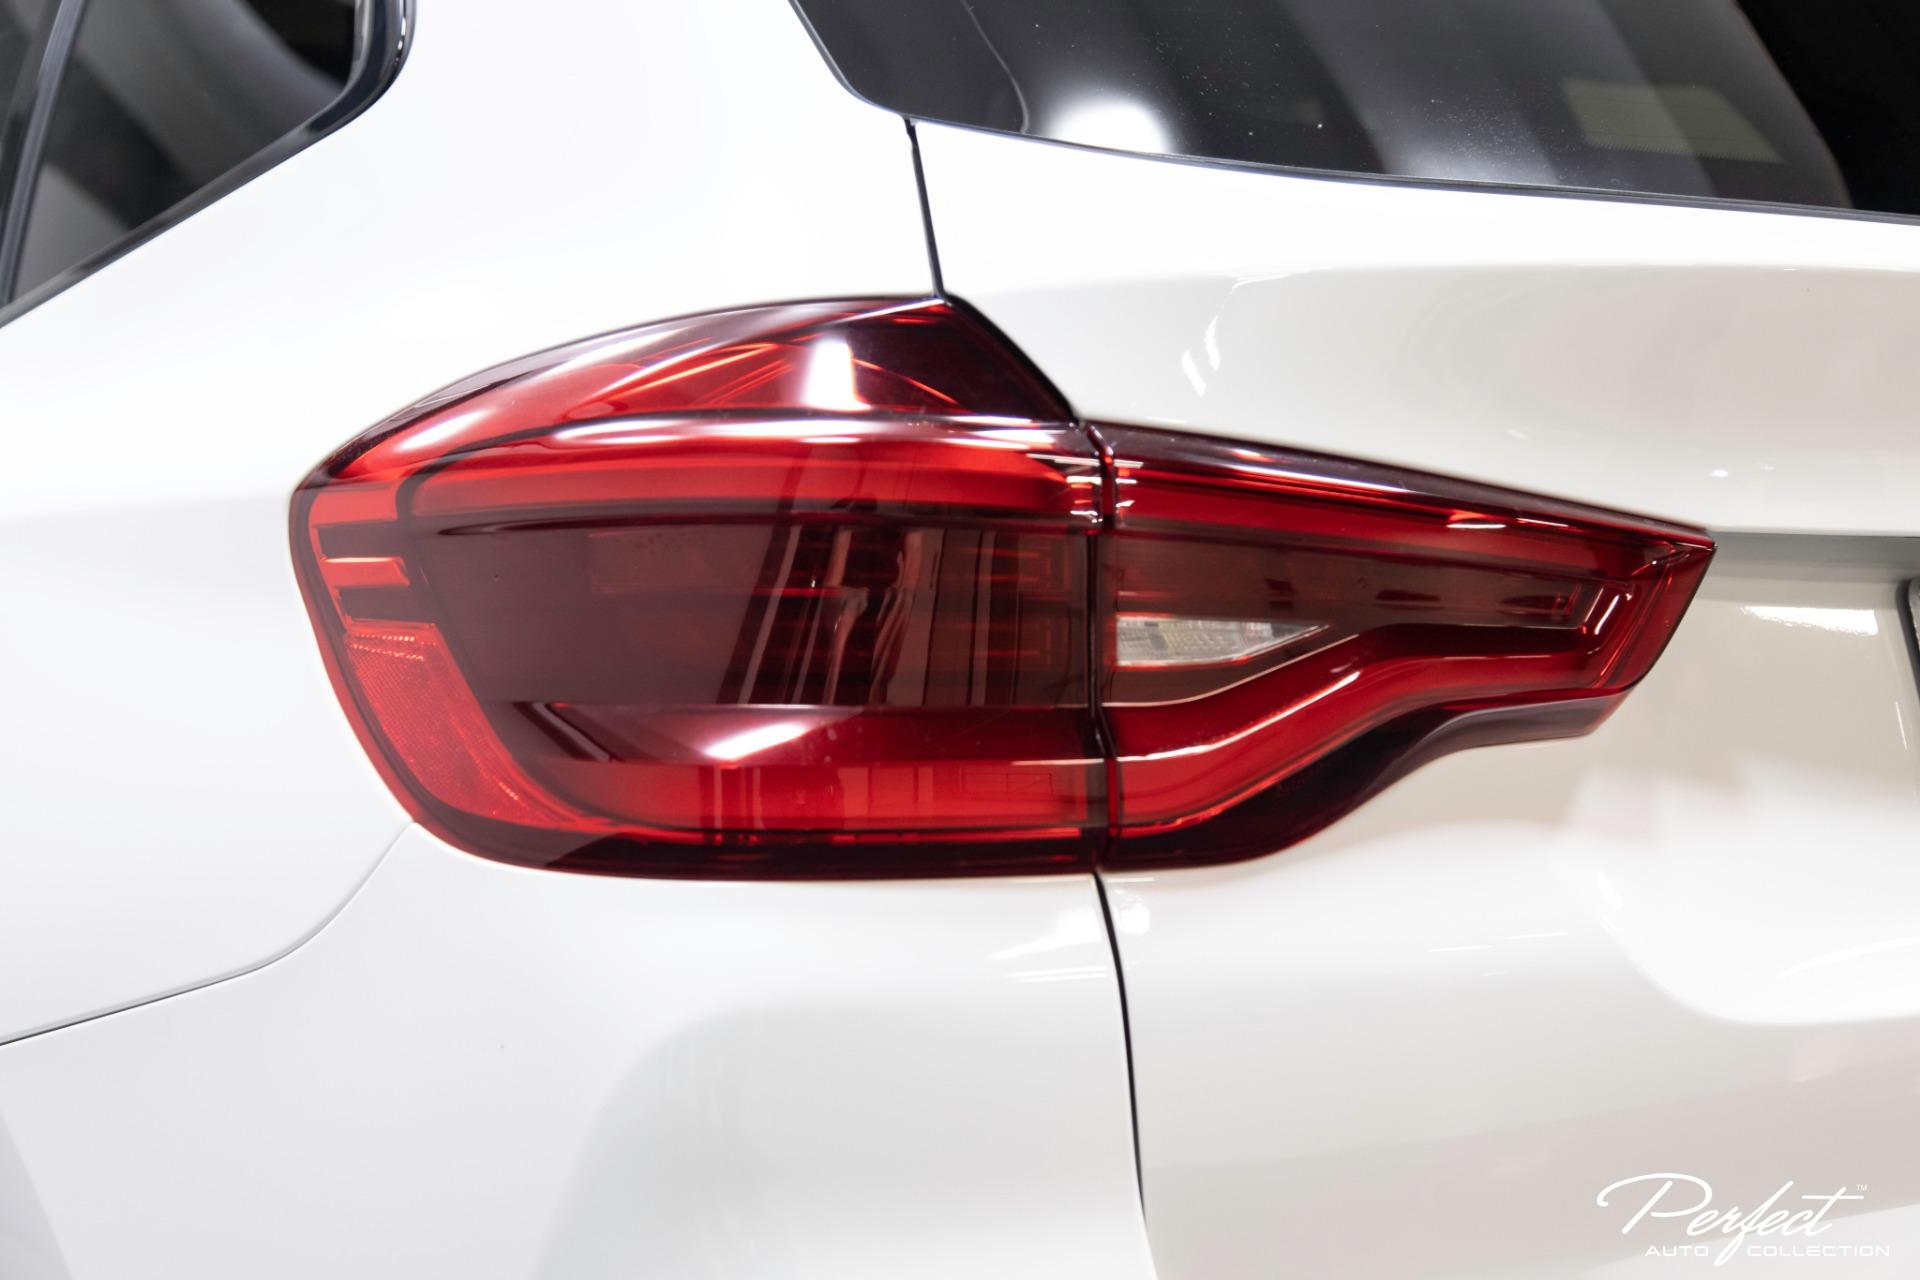 2018 BMW X3 xDrive 30i essentials: Heavy on sport, light on utility